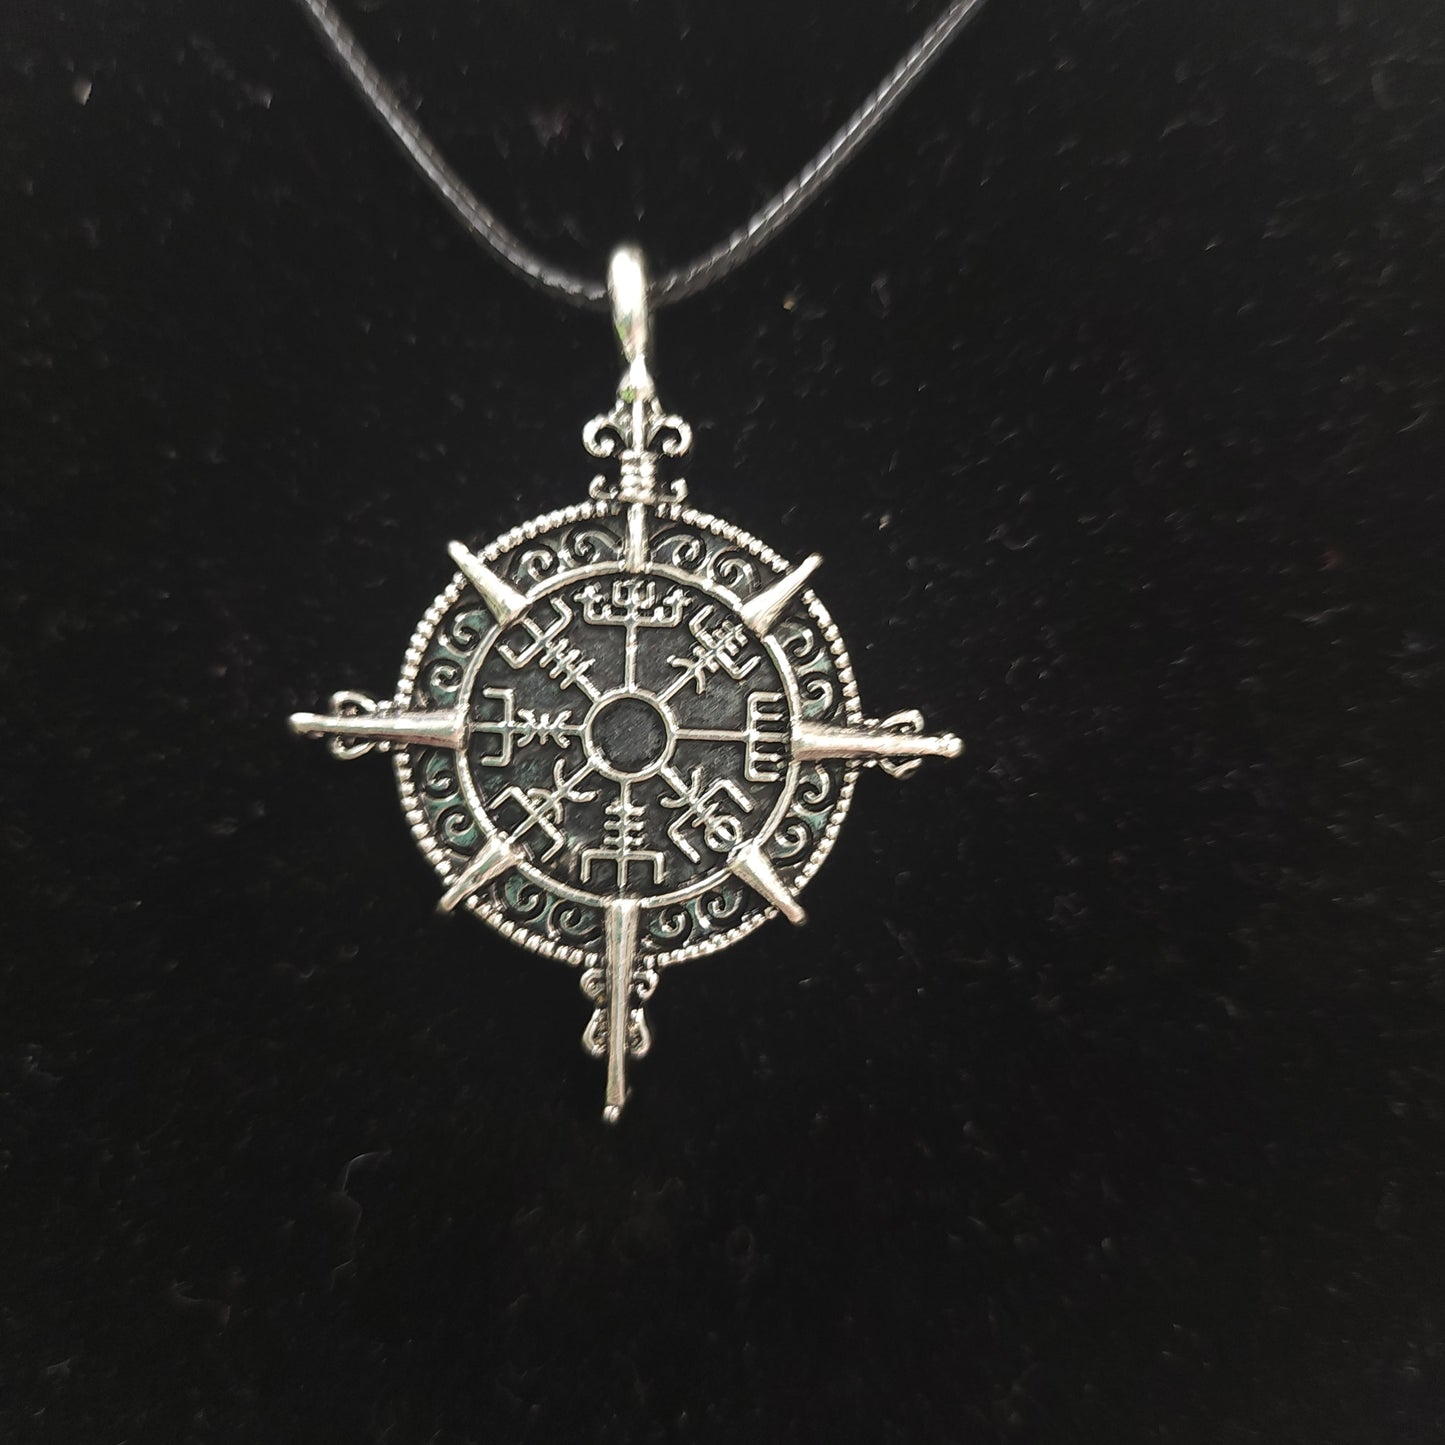 Nordic Viking Compass Pendant Necklace